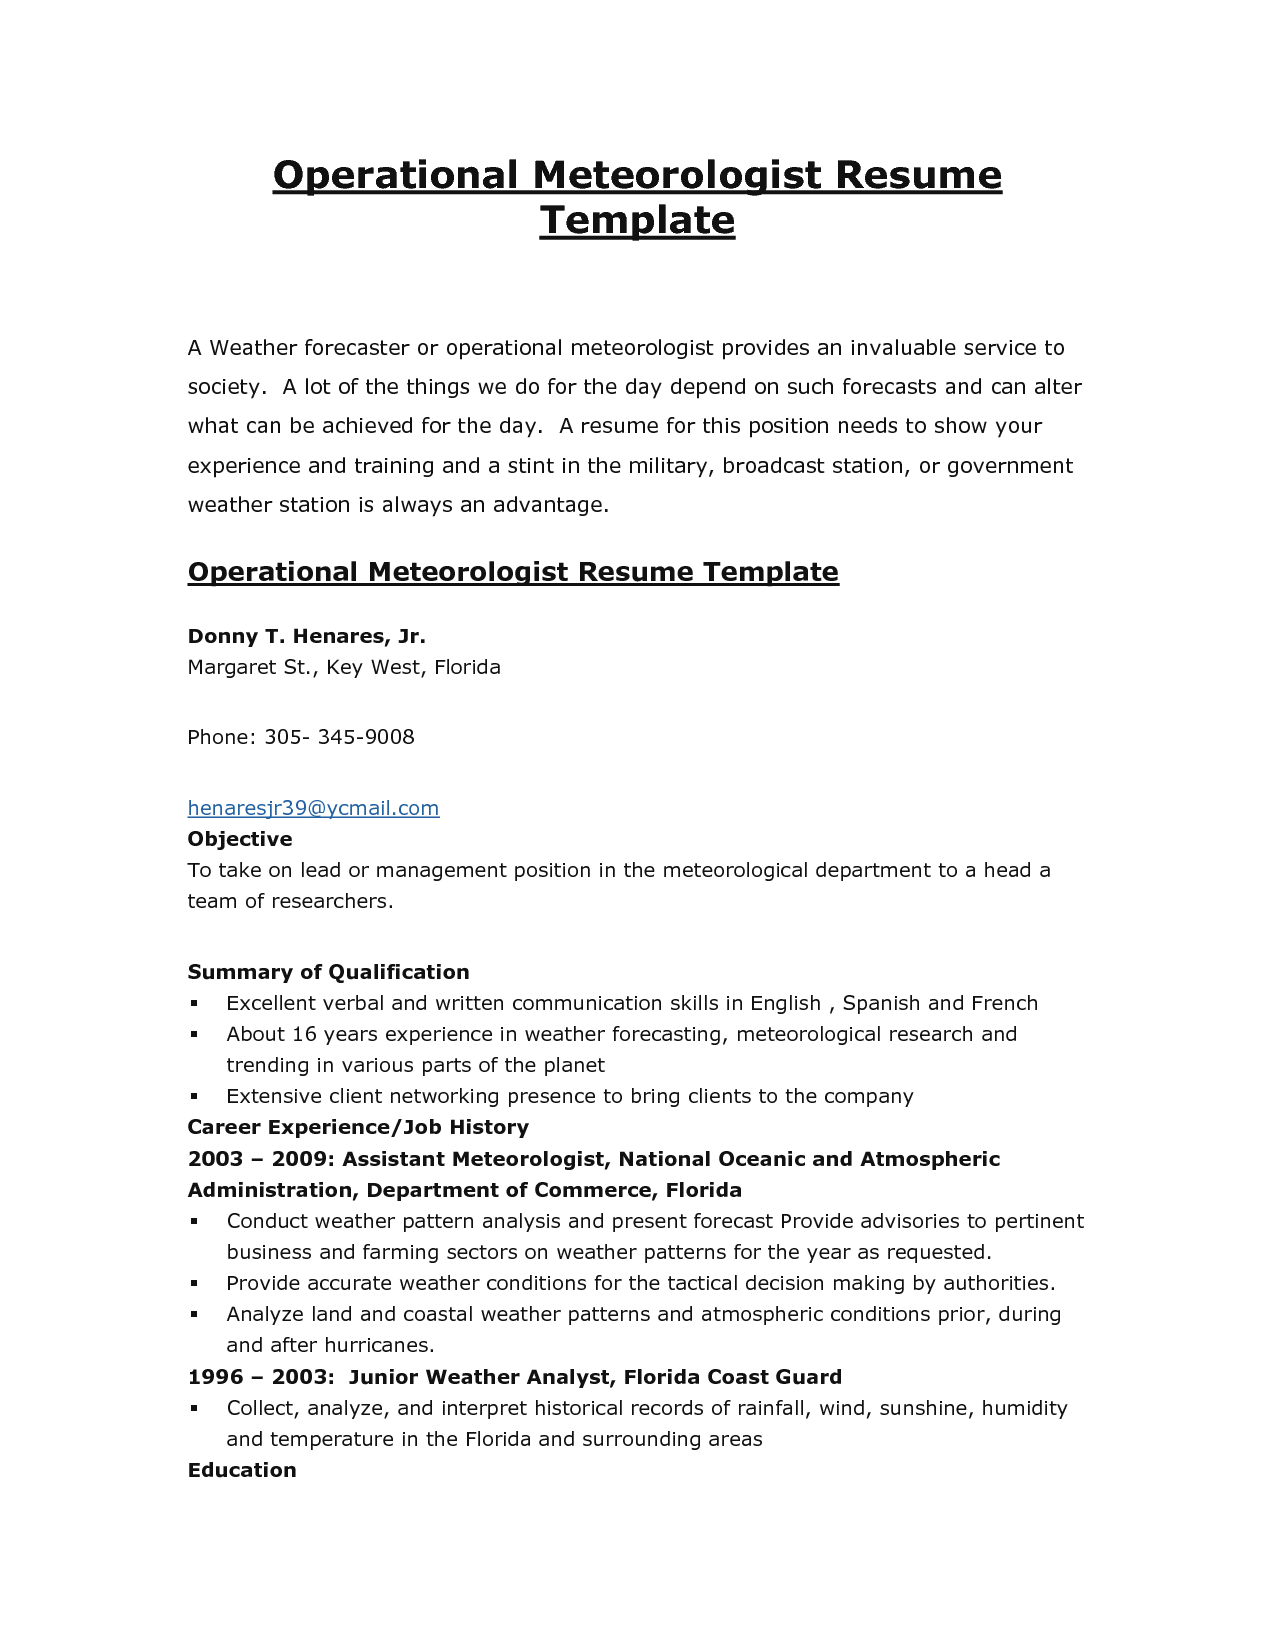 Federal Resume Template Government Resume Exampleshow To Write A Resume For A Federal Resume Format For Federal Government Jobs federal resume template|wikiresume.com